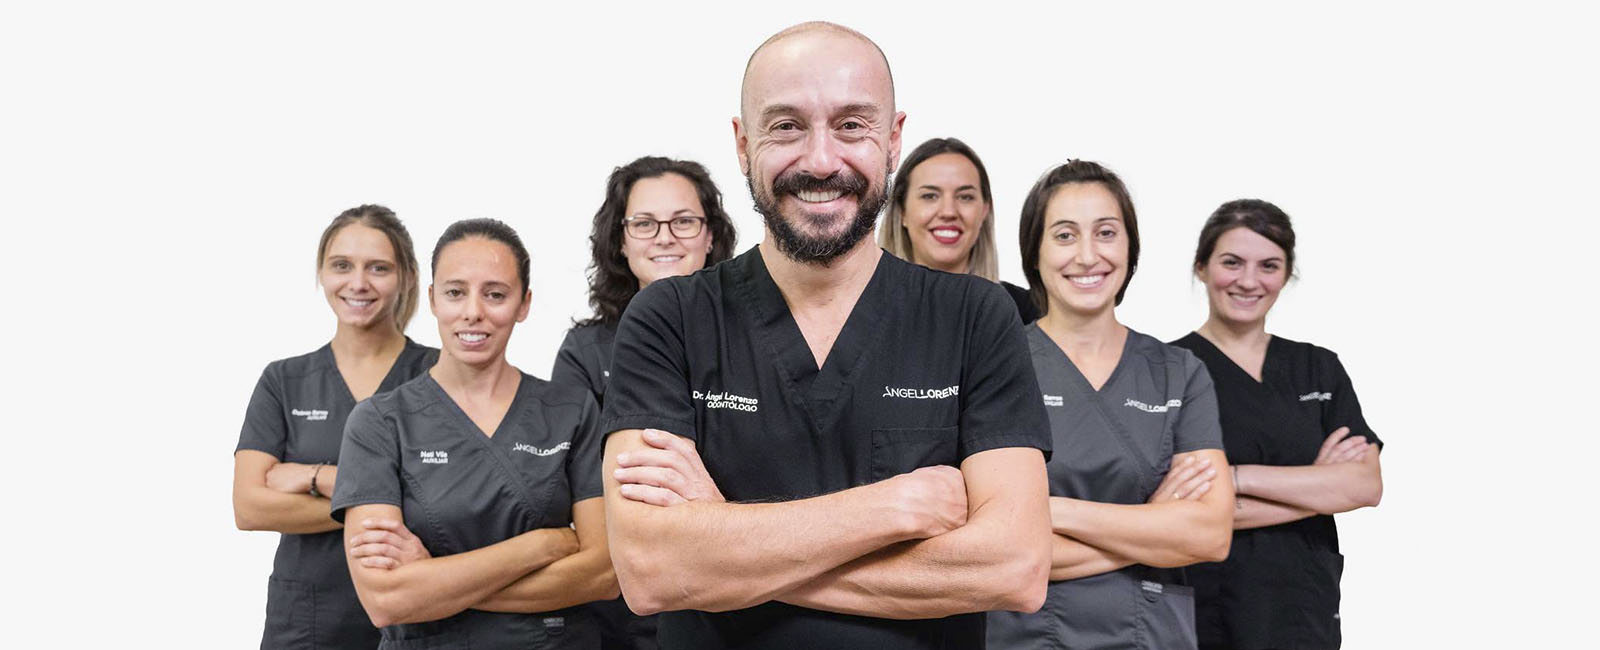 clinica dental angel lorenzo_equipo2_feliz 2020